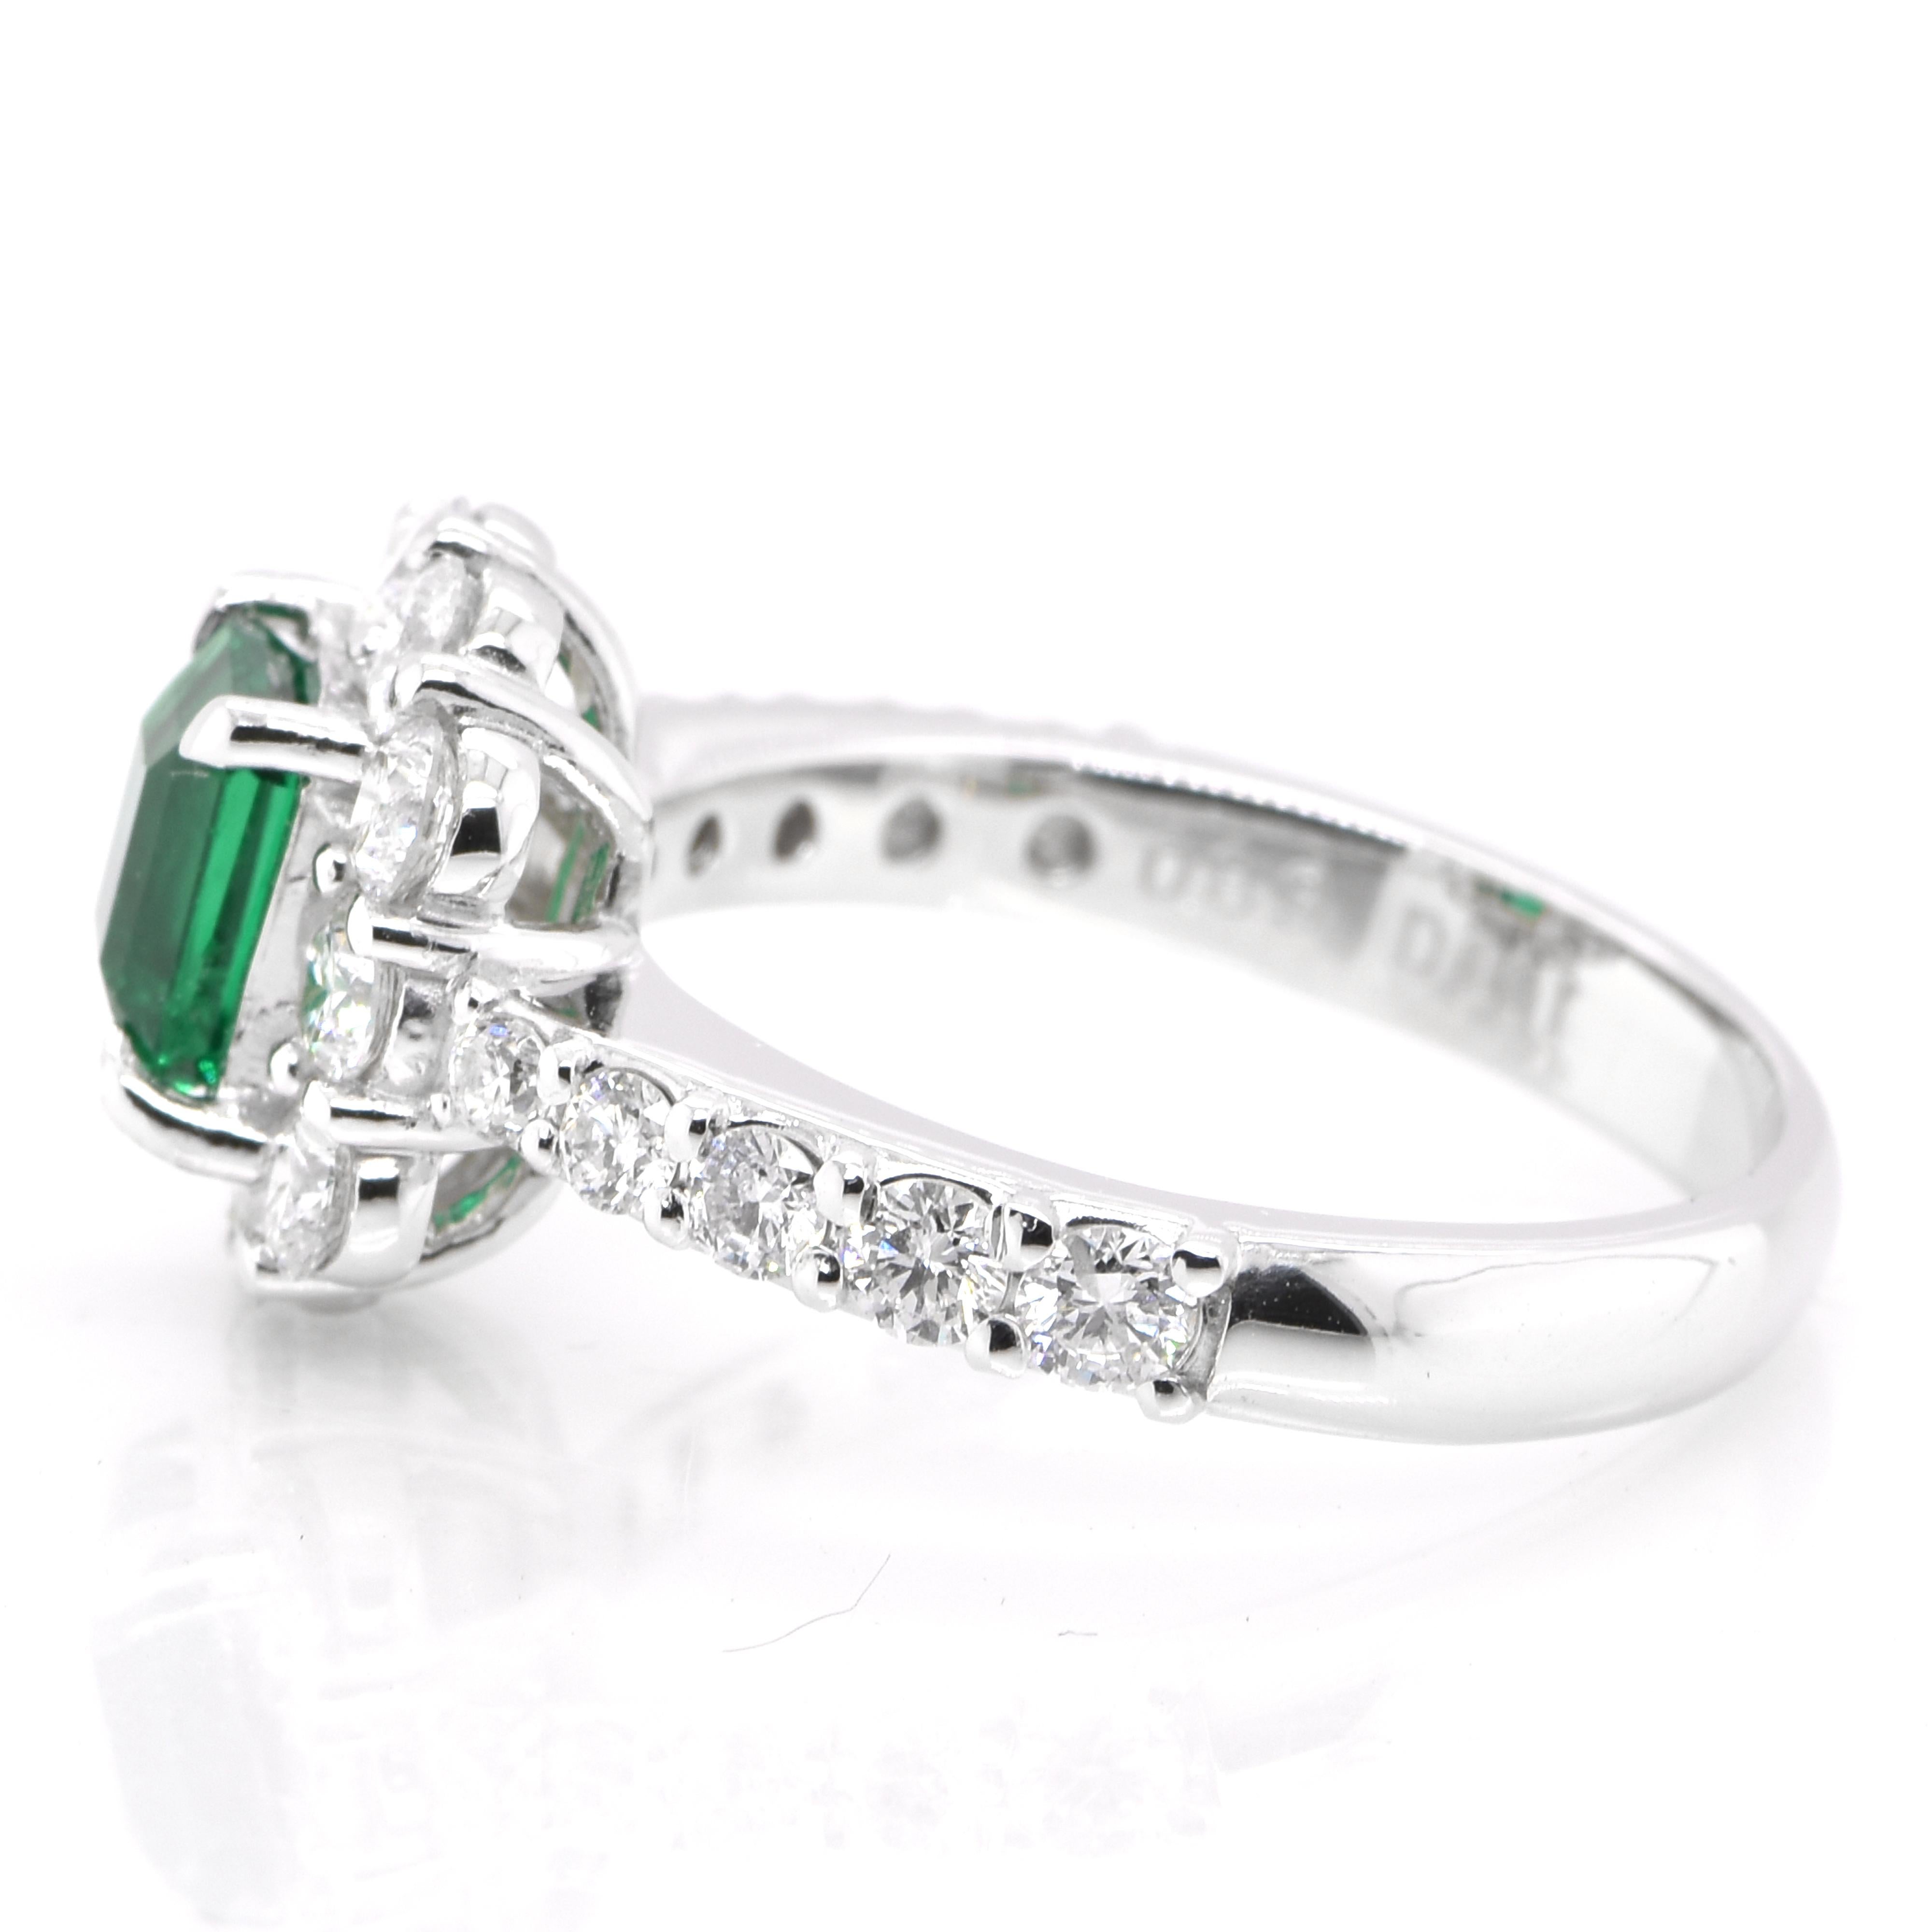 Emerald Cut 0.89 Carat Vivid Green Emerald and Diamond Halo Ring Set in Platinum For Sale